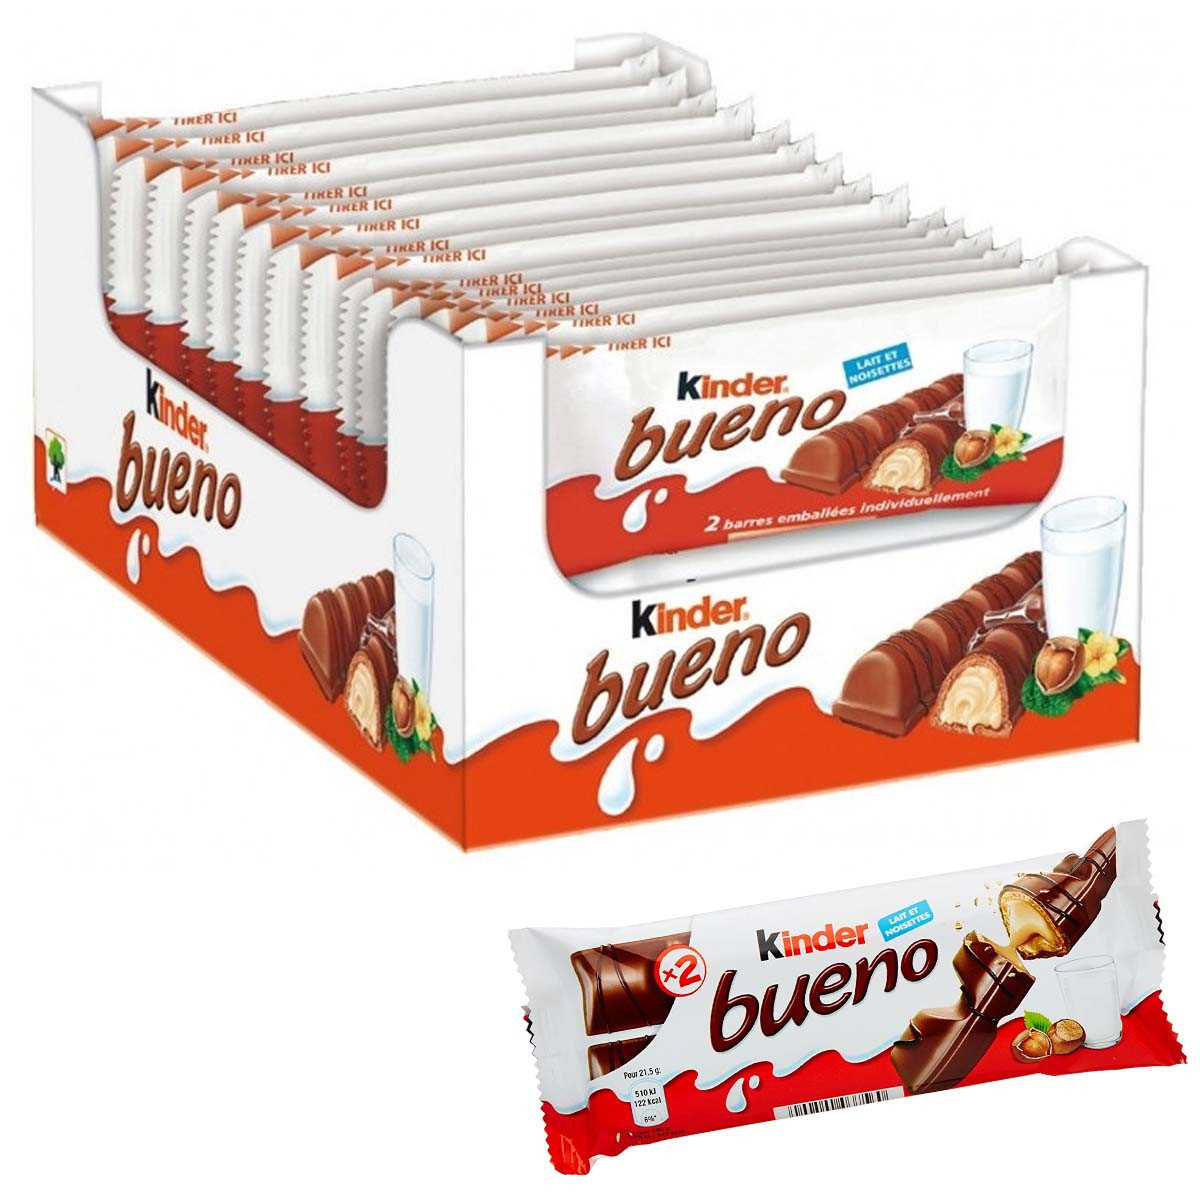 Kinder Bueno 30 Barres Chocolat et Noisette : Achat en Ligne -  Coffee-Webstore